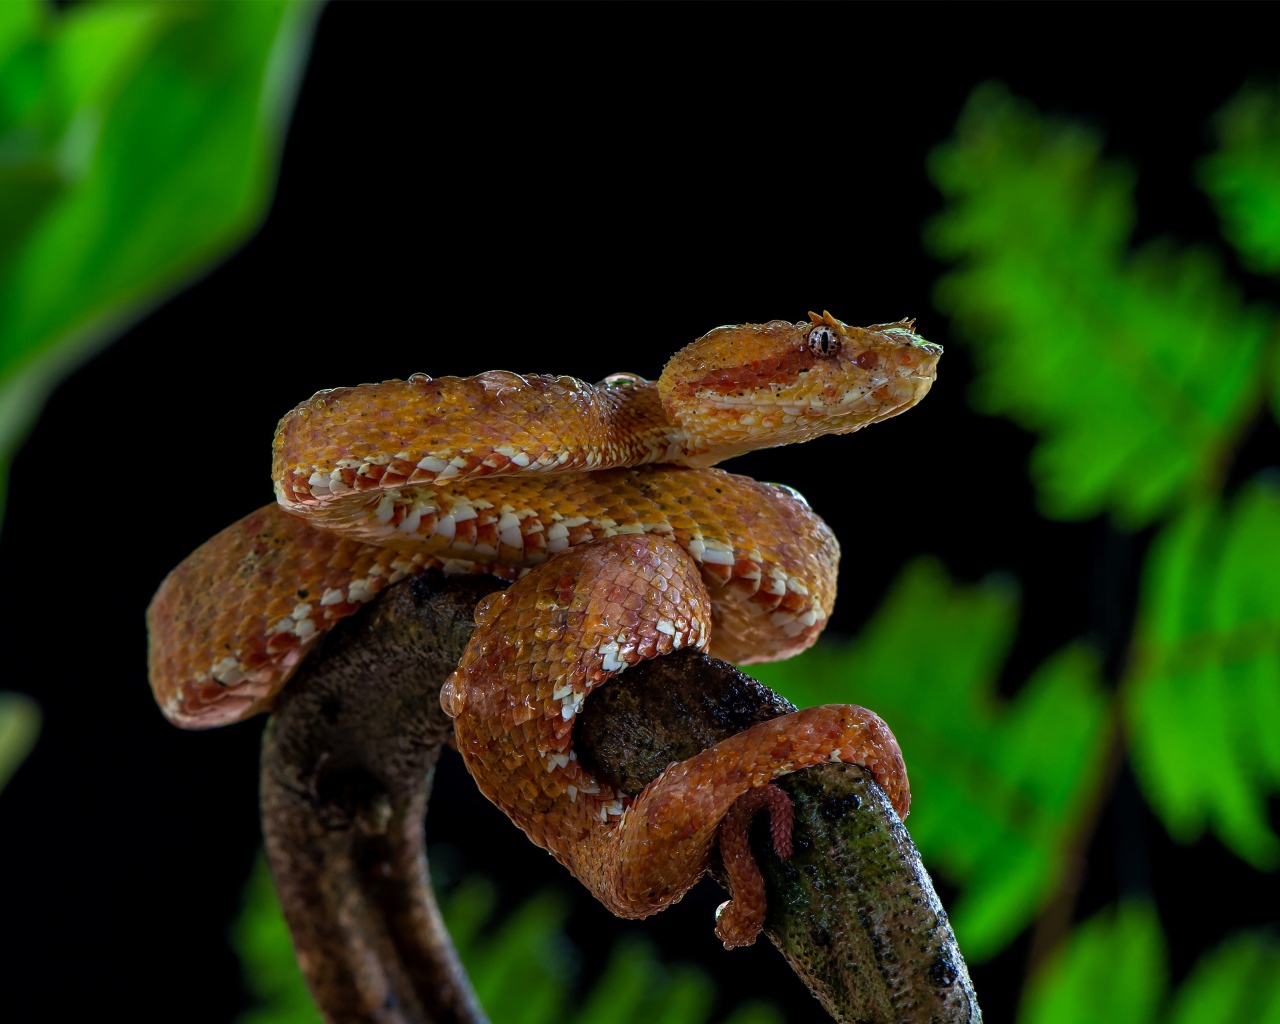 Large venomous snake on a tree branch